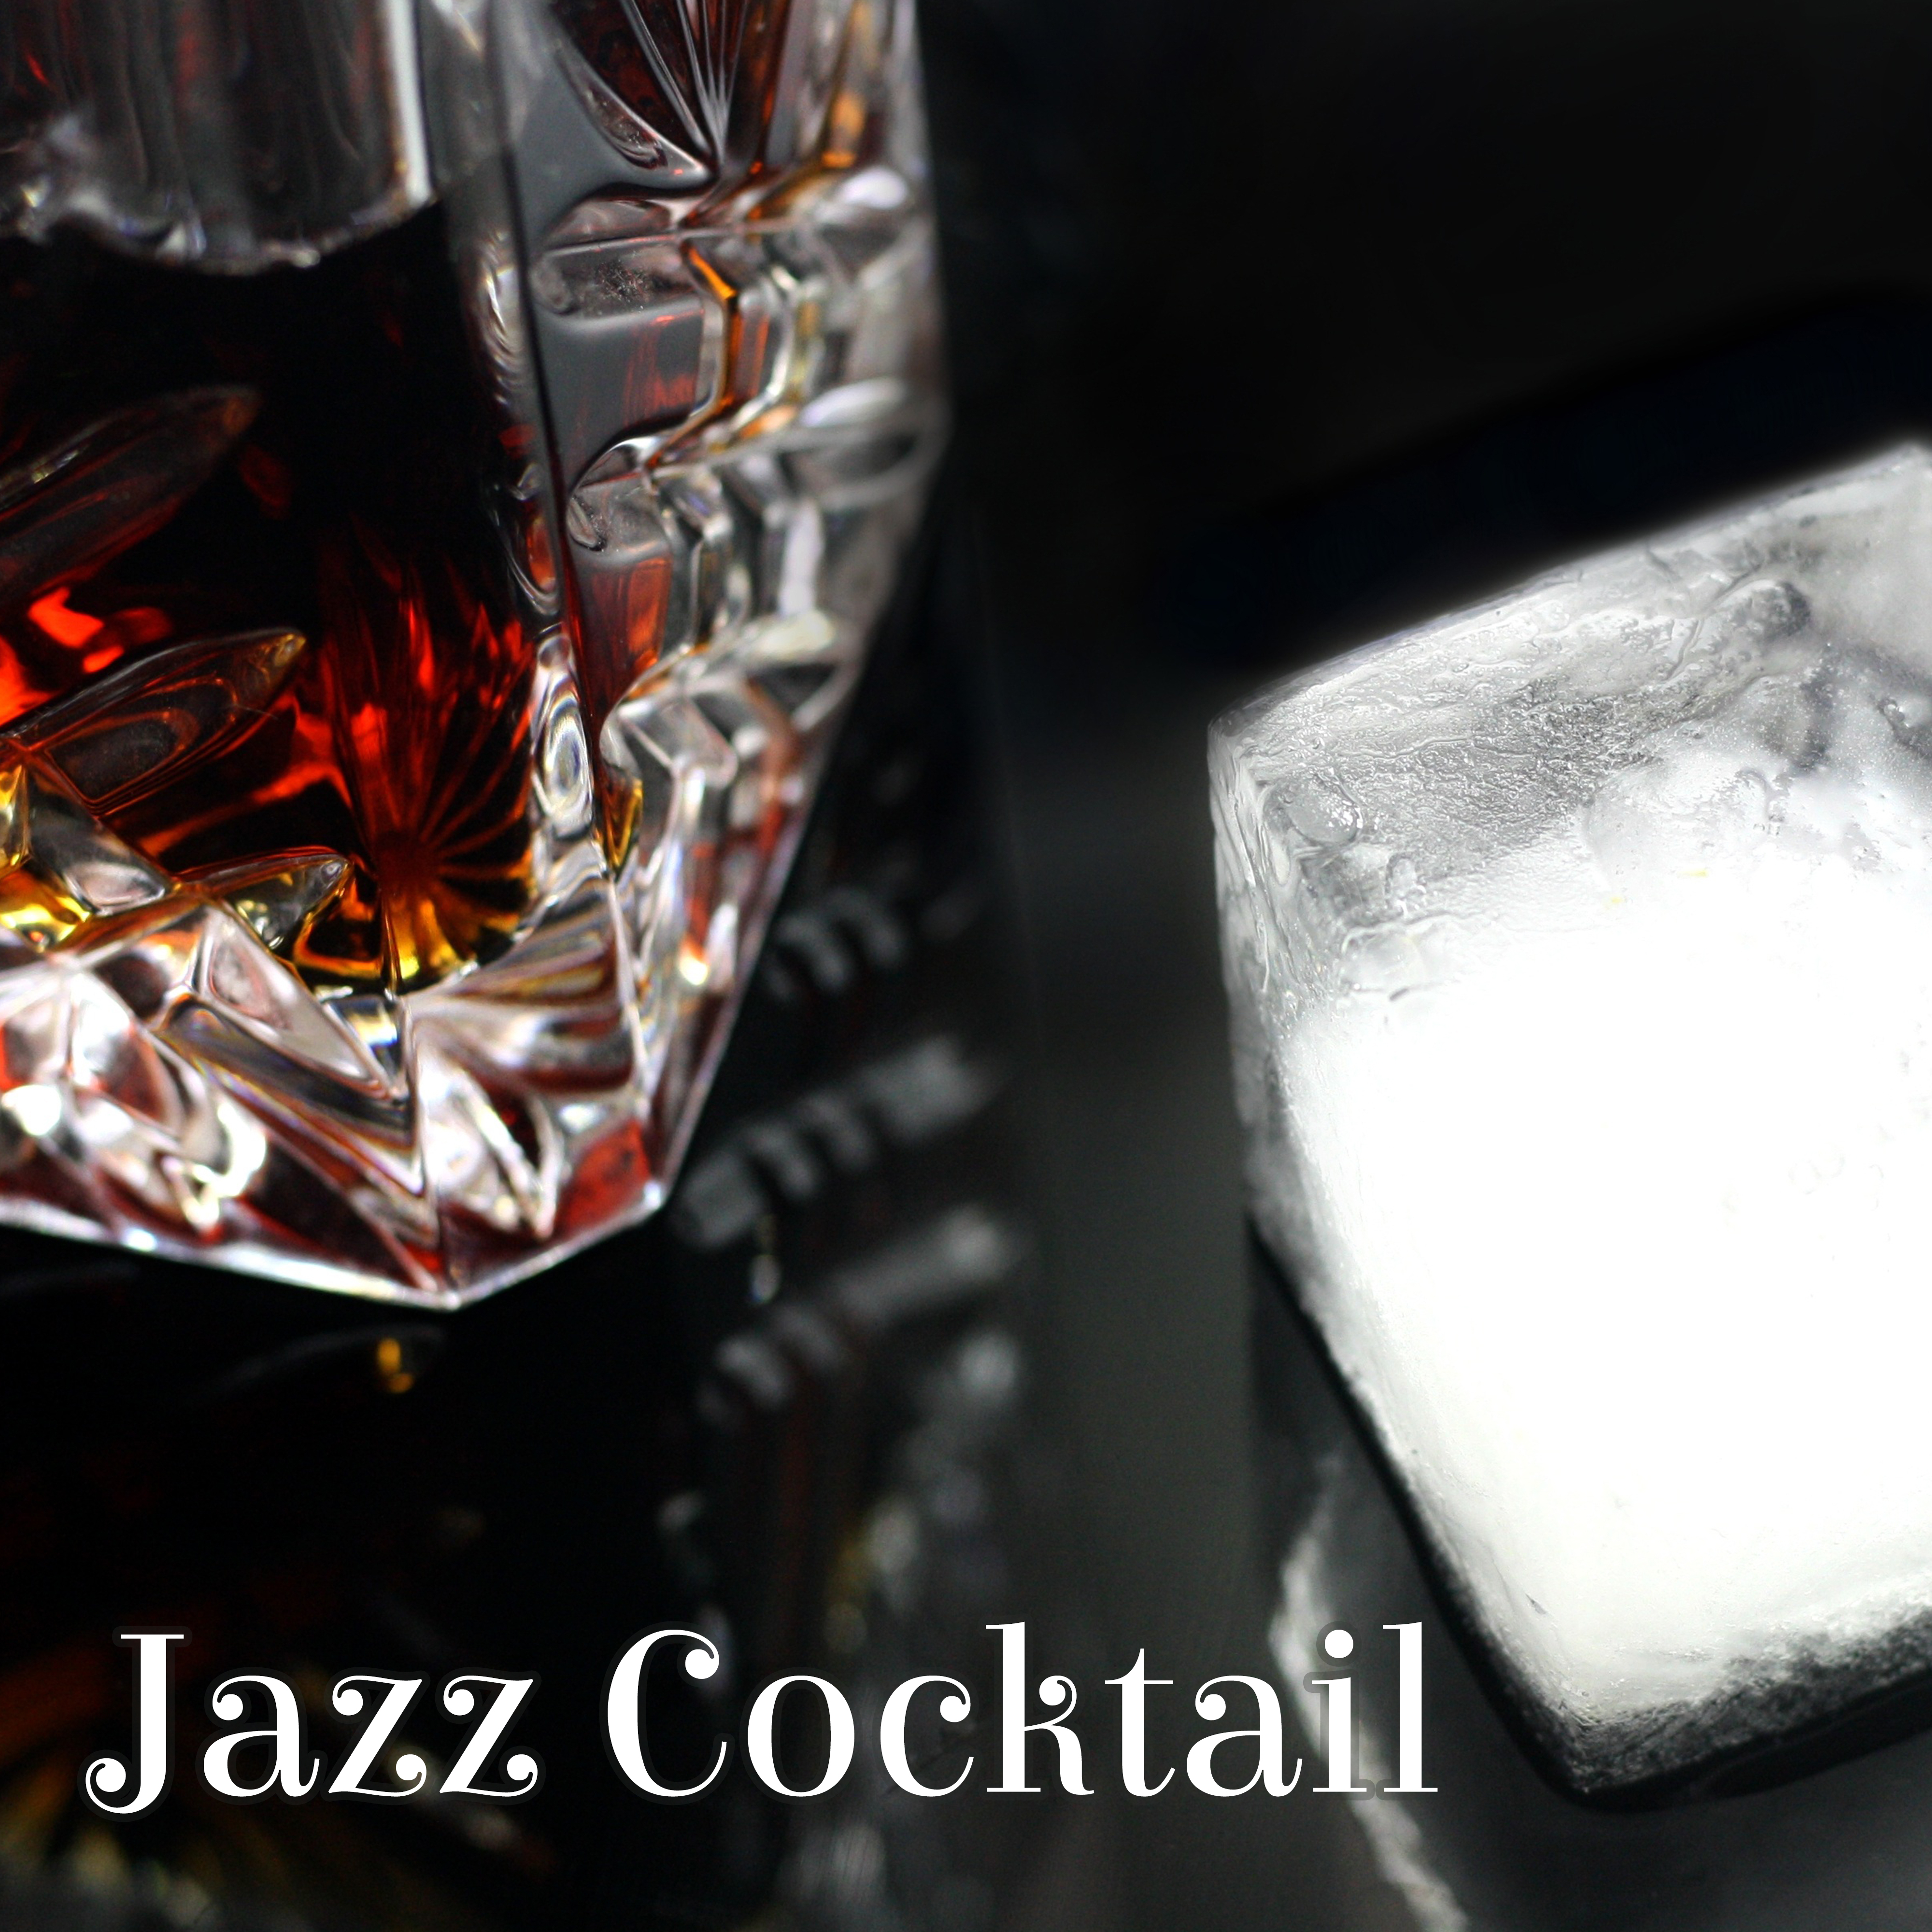 Jazz Cocktail  Soothing Jazz Sounds, Instrumental Music, Mellow Jazz  for Background to Jazz Club  Bar